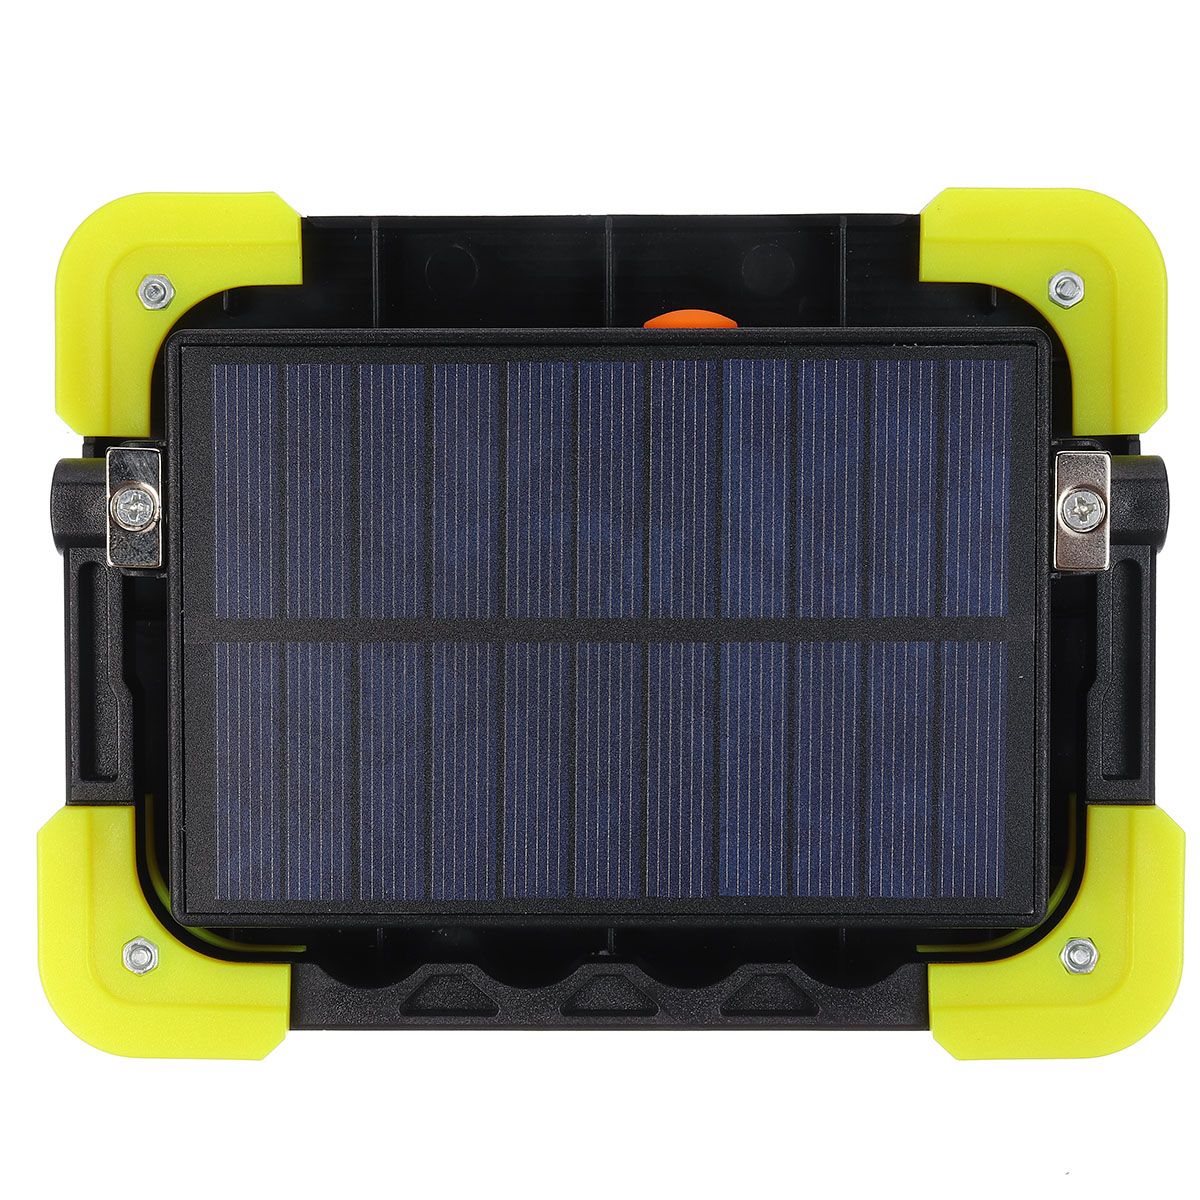 60W-Foldable-Solar-Work-Light-USB-Charging-Portable-Spotlight-Camping-Emergency-1595789